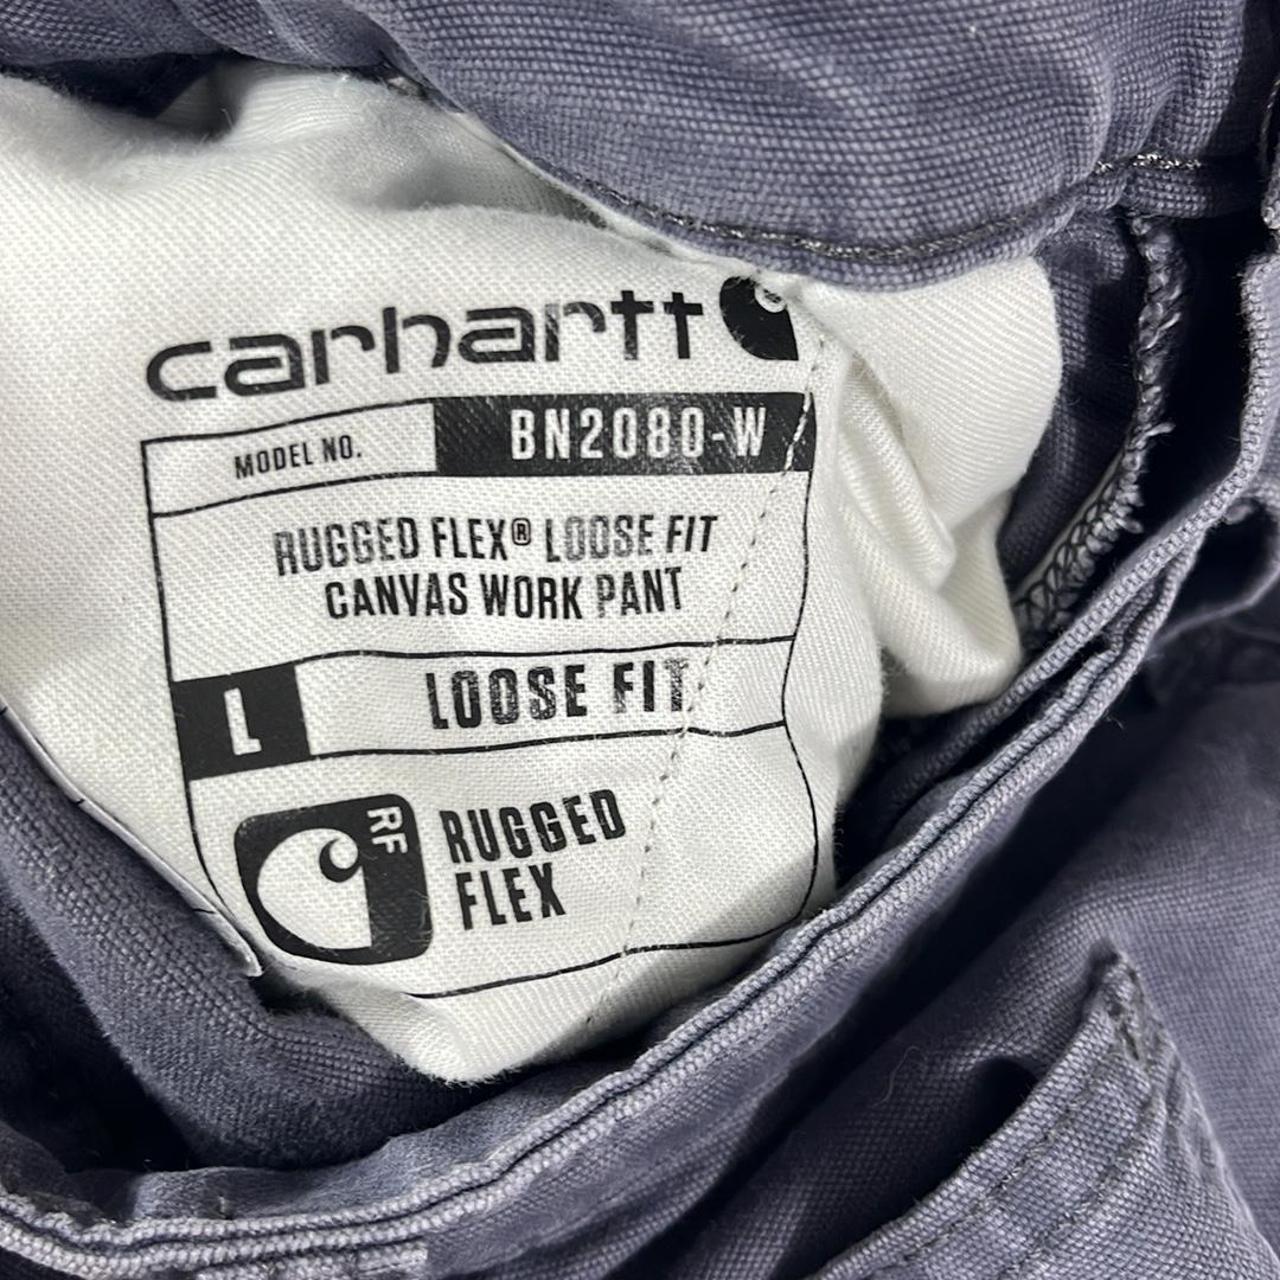 Carhartt Womens Size 8 Rugged Flex Loose Fit Canvas Work Pants BN2080-W